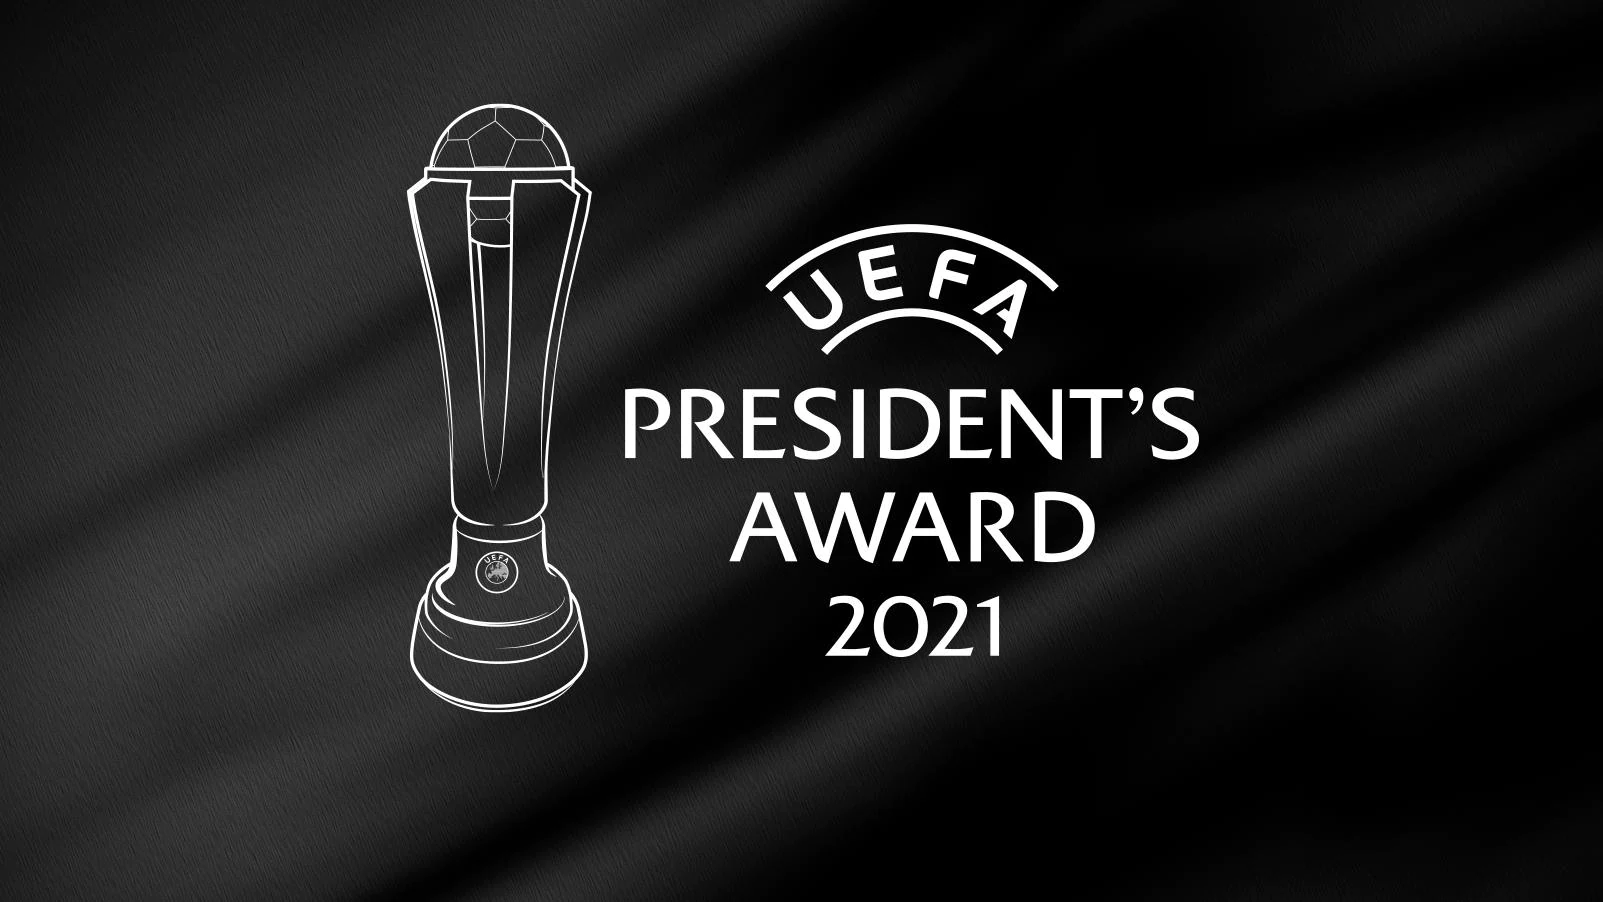 UEFA President's award